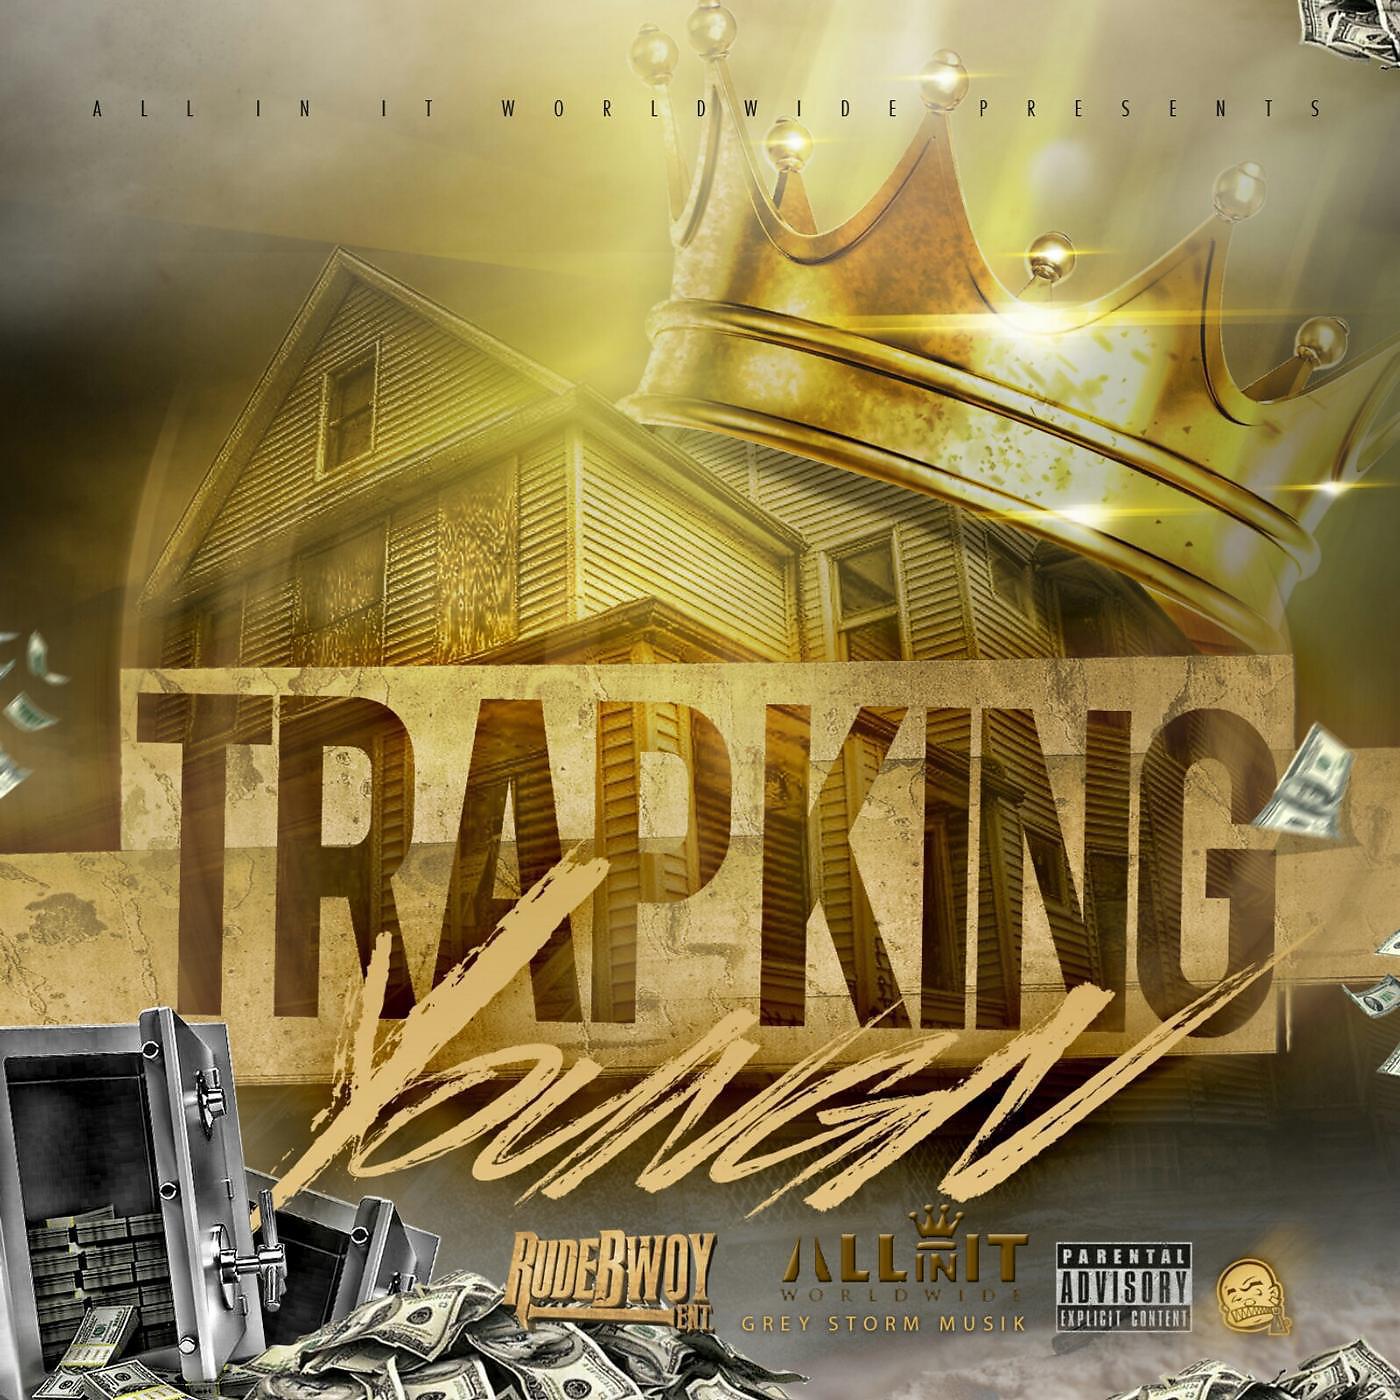 Постер альбома Trap King